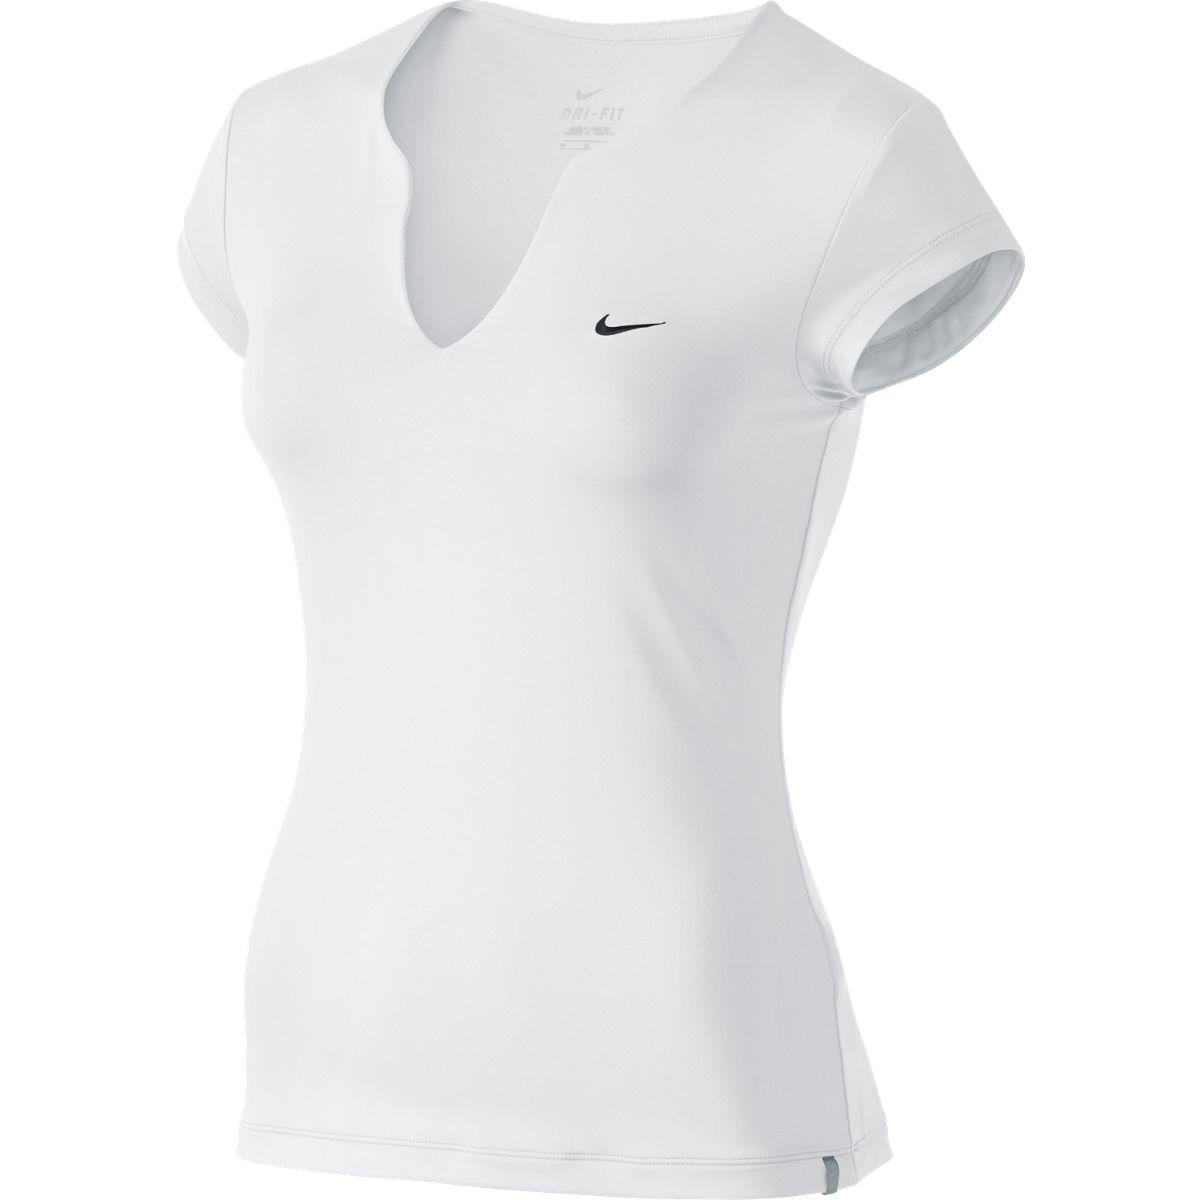 Vooruitgang lood Benadering Nike Womens Pure Capsleeve Top - White - Tennisnuts.com